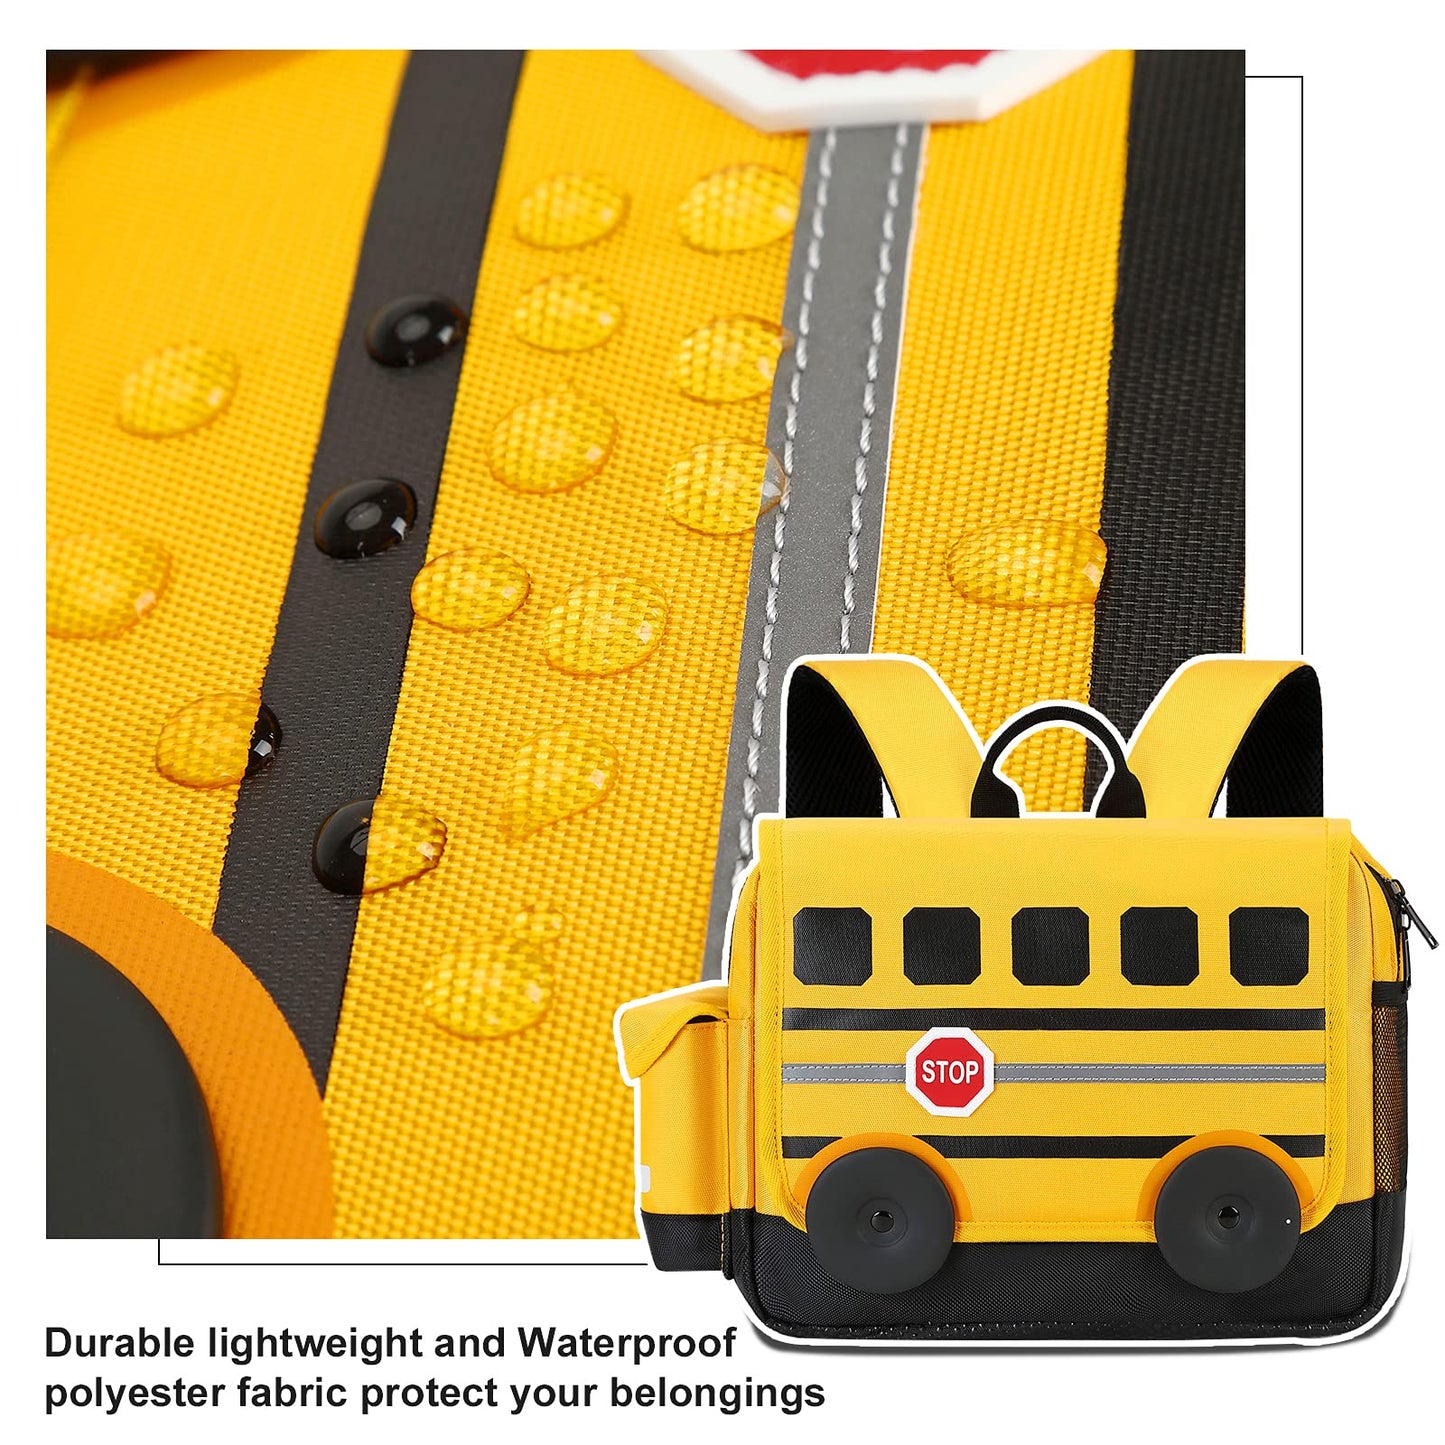 Toddler Backpack Boy Preschool School Bus Bookbag Kindergarten 3D Daycare Bags with Insulation Lunch Box